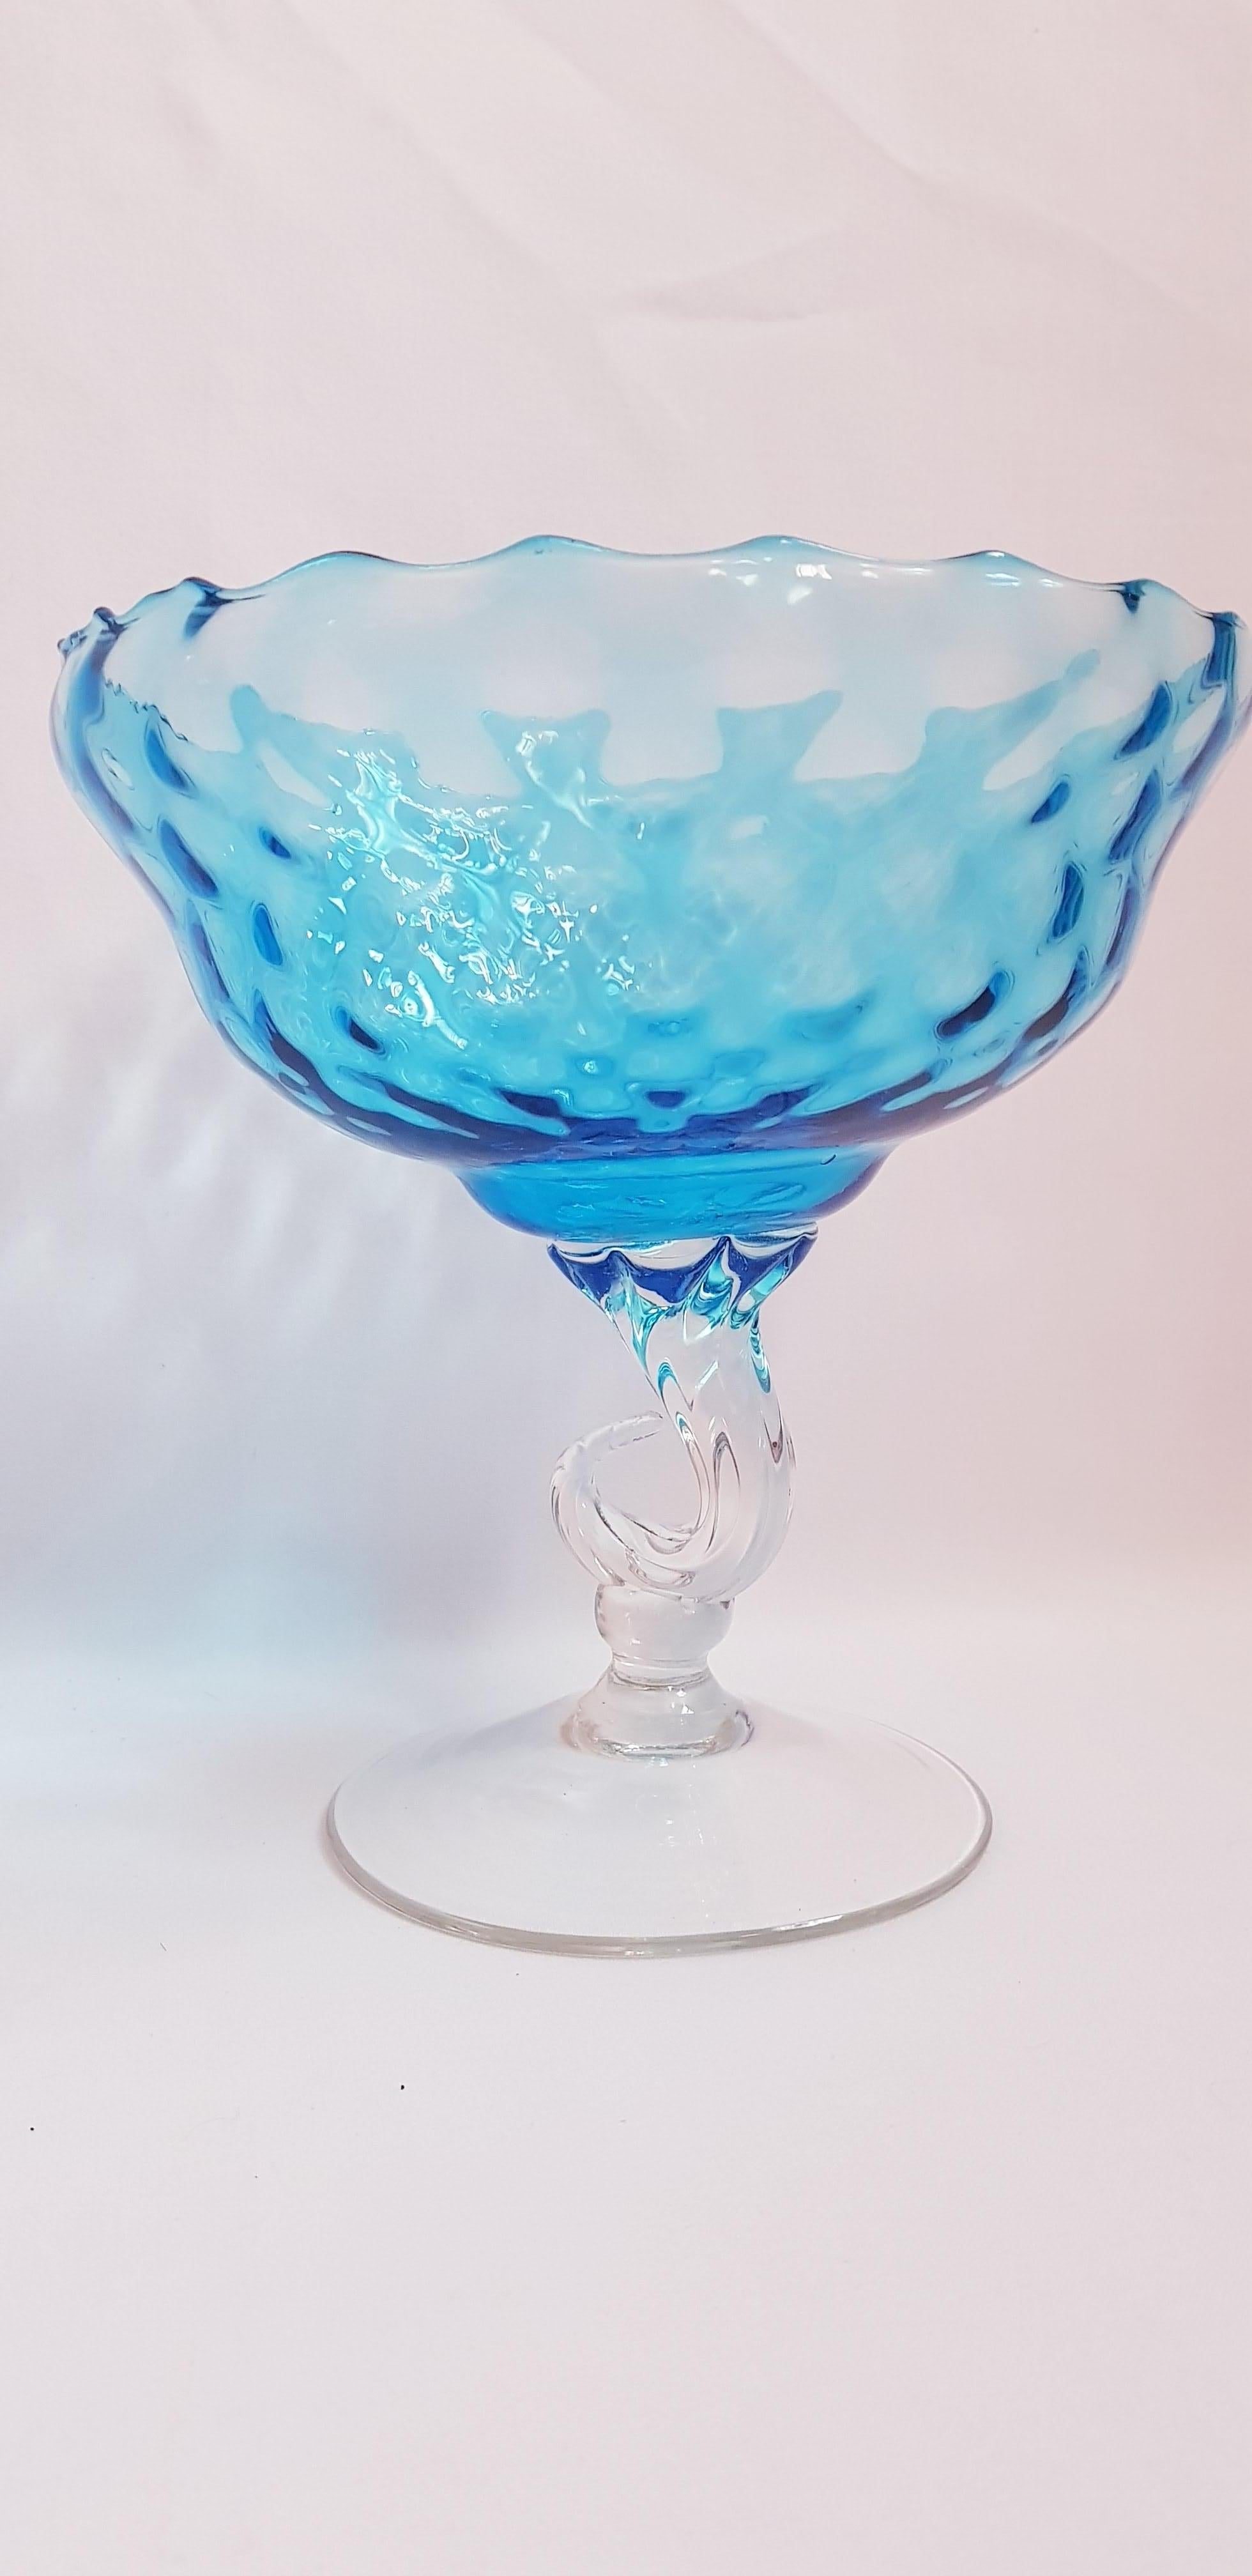 Beautiful vitange Empoli optical glass large bowl blue and clear brilliant condition beautiful home decor.